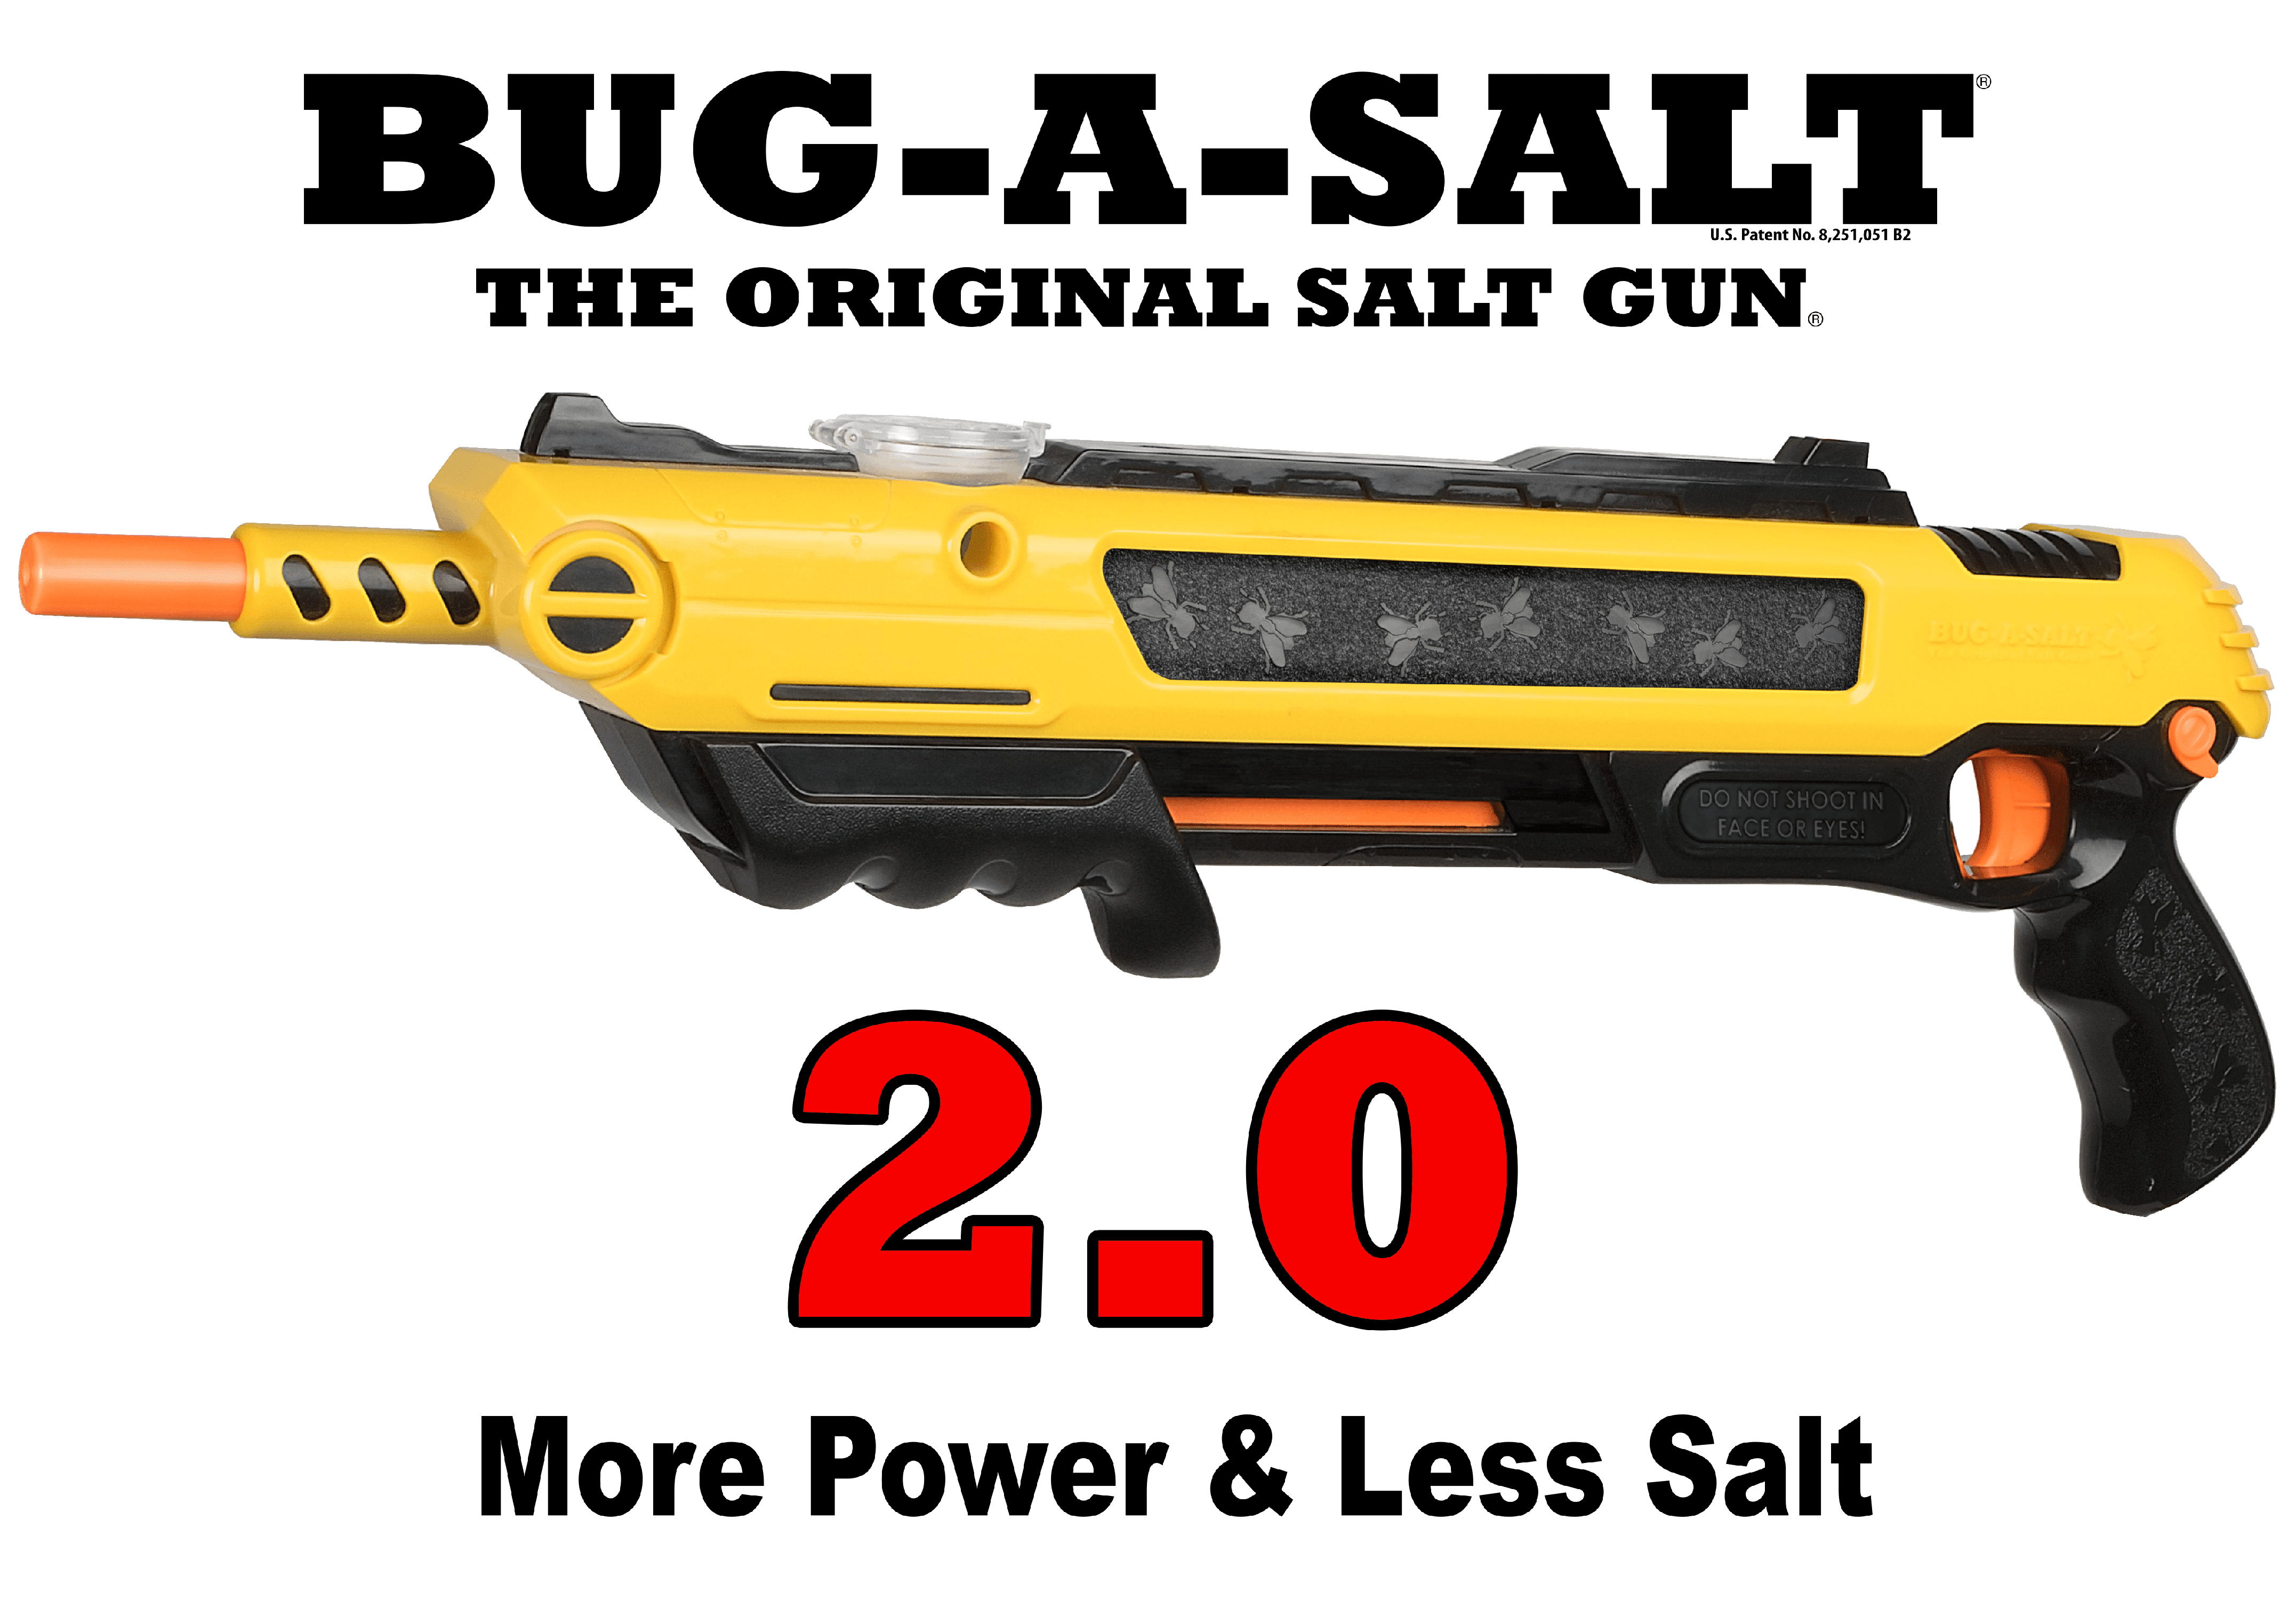 Bug-A-Salt 2.0 Pest Eradication Device - Sam's Club